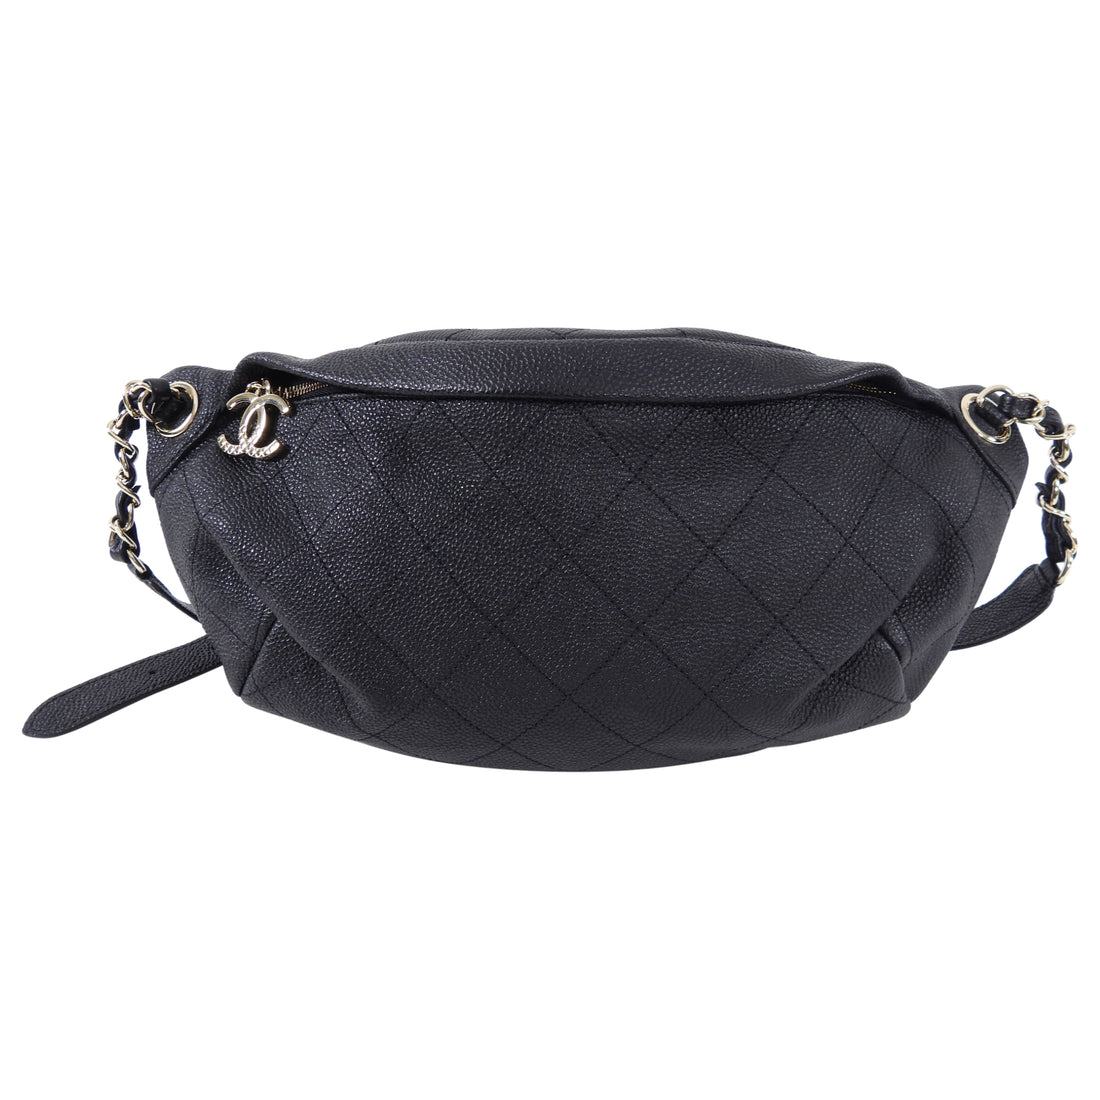 Chanel Banane Belt Bag Raspberry Pink Soft Caviar Leather